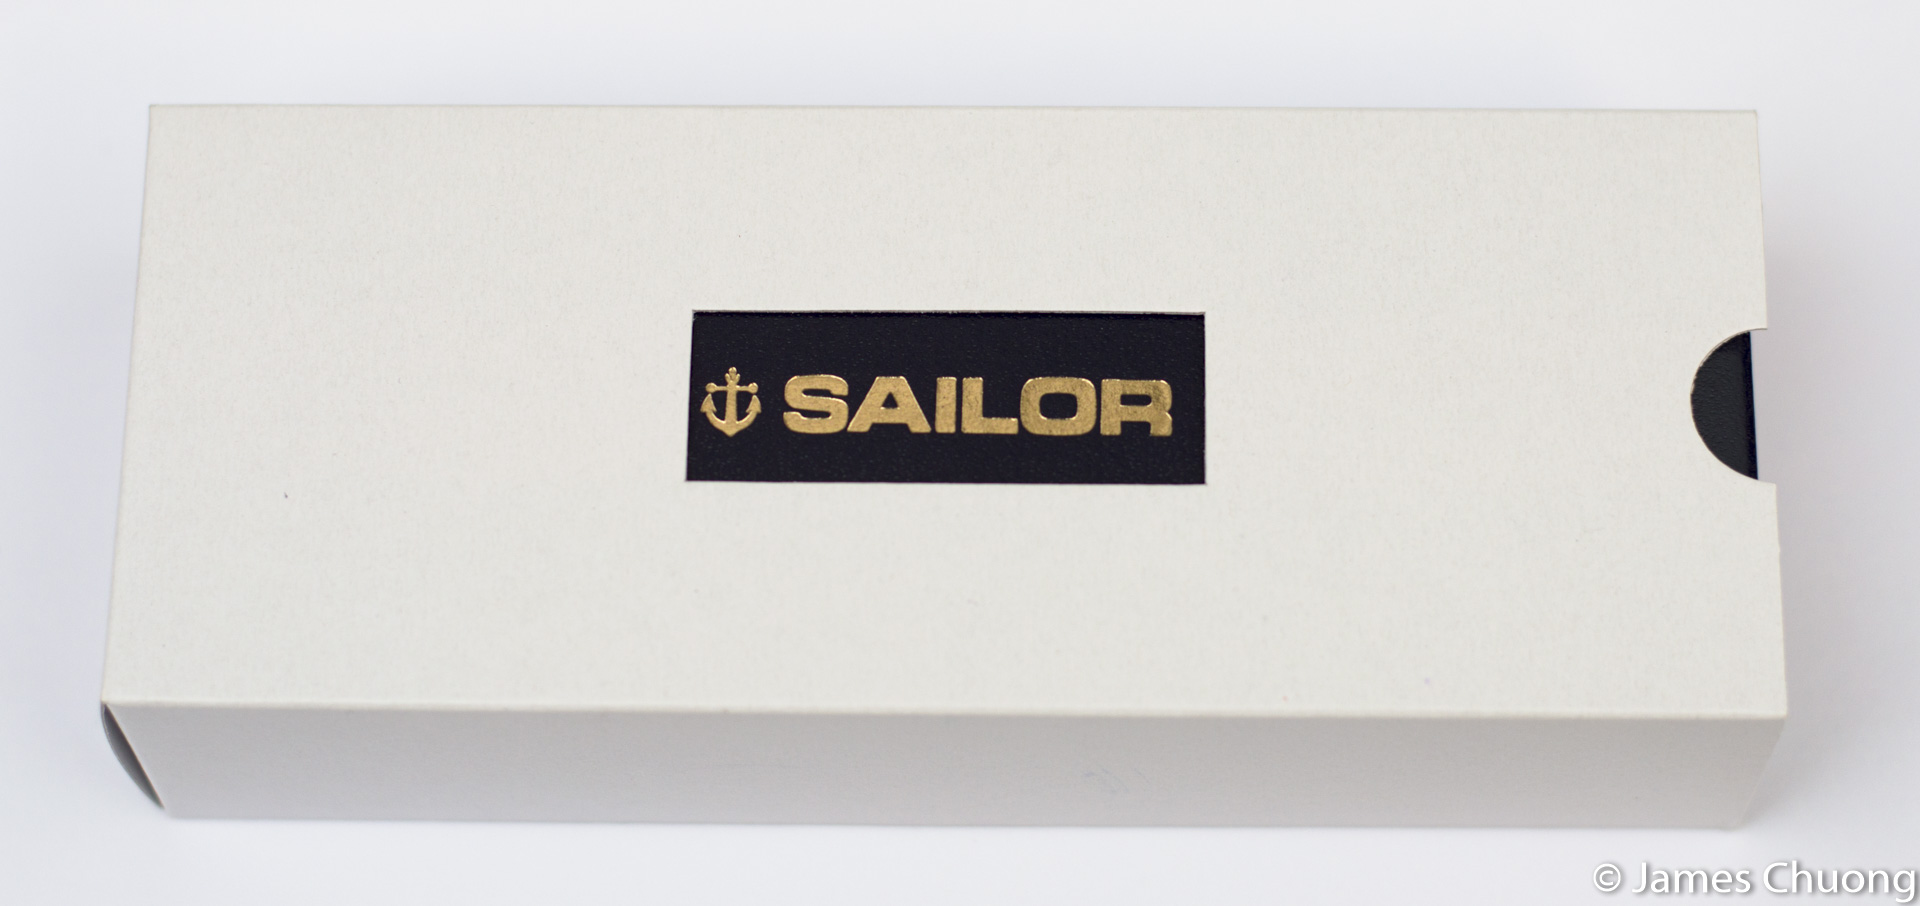 Sailor Packaging